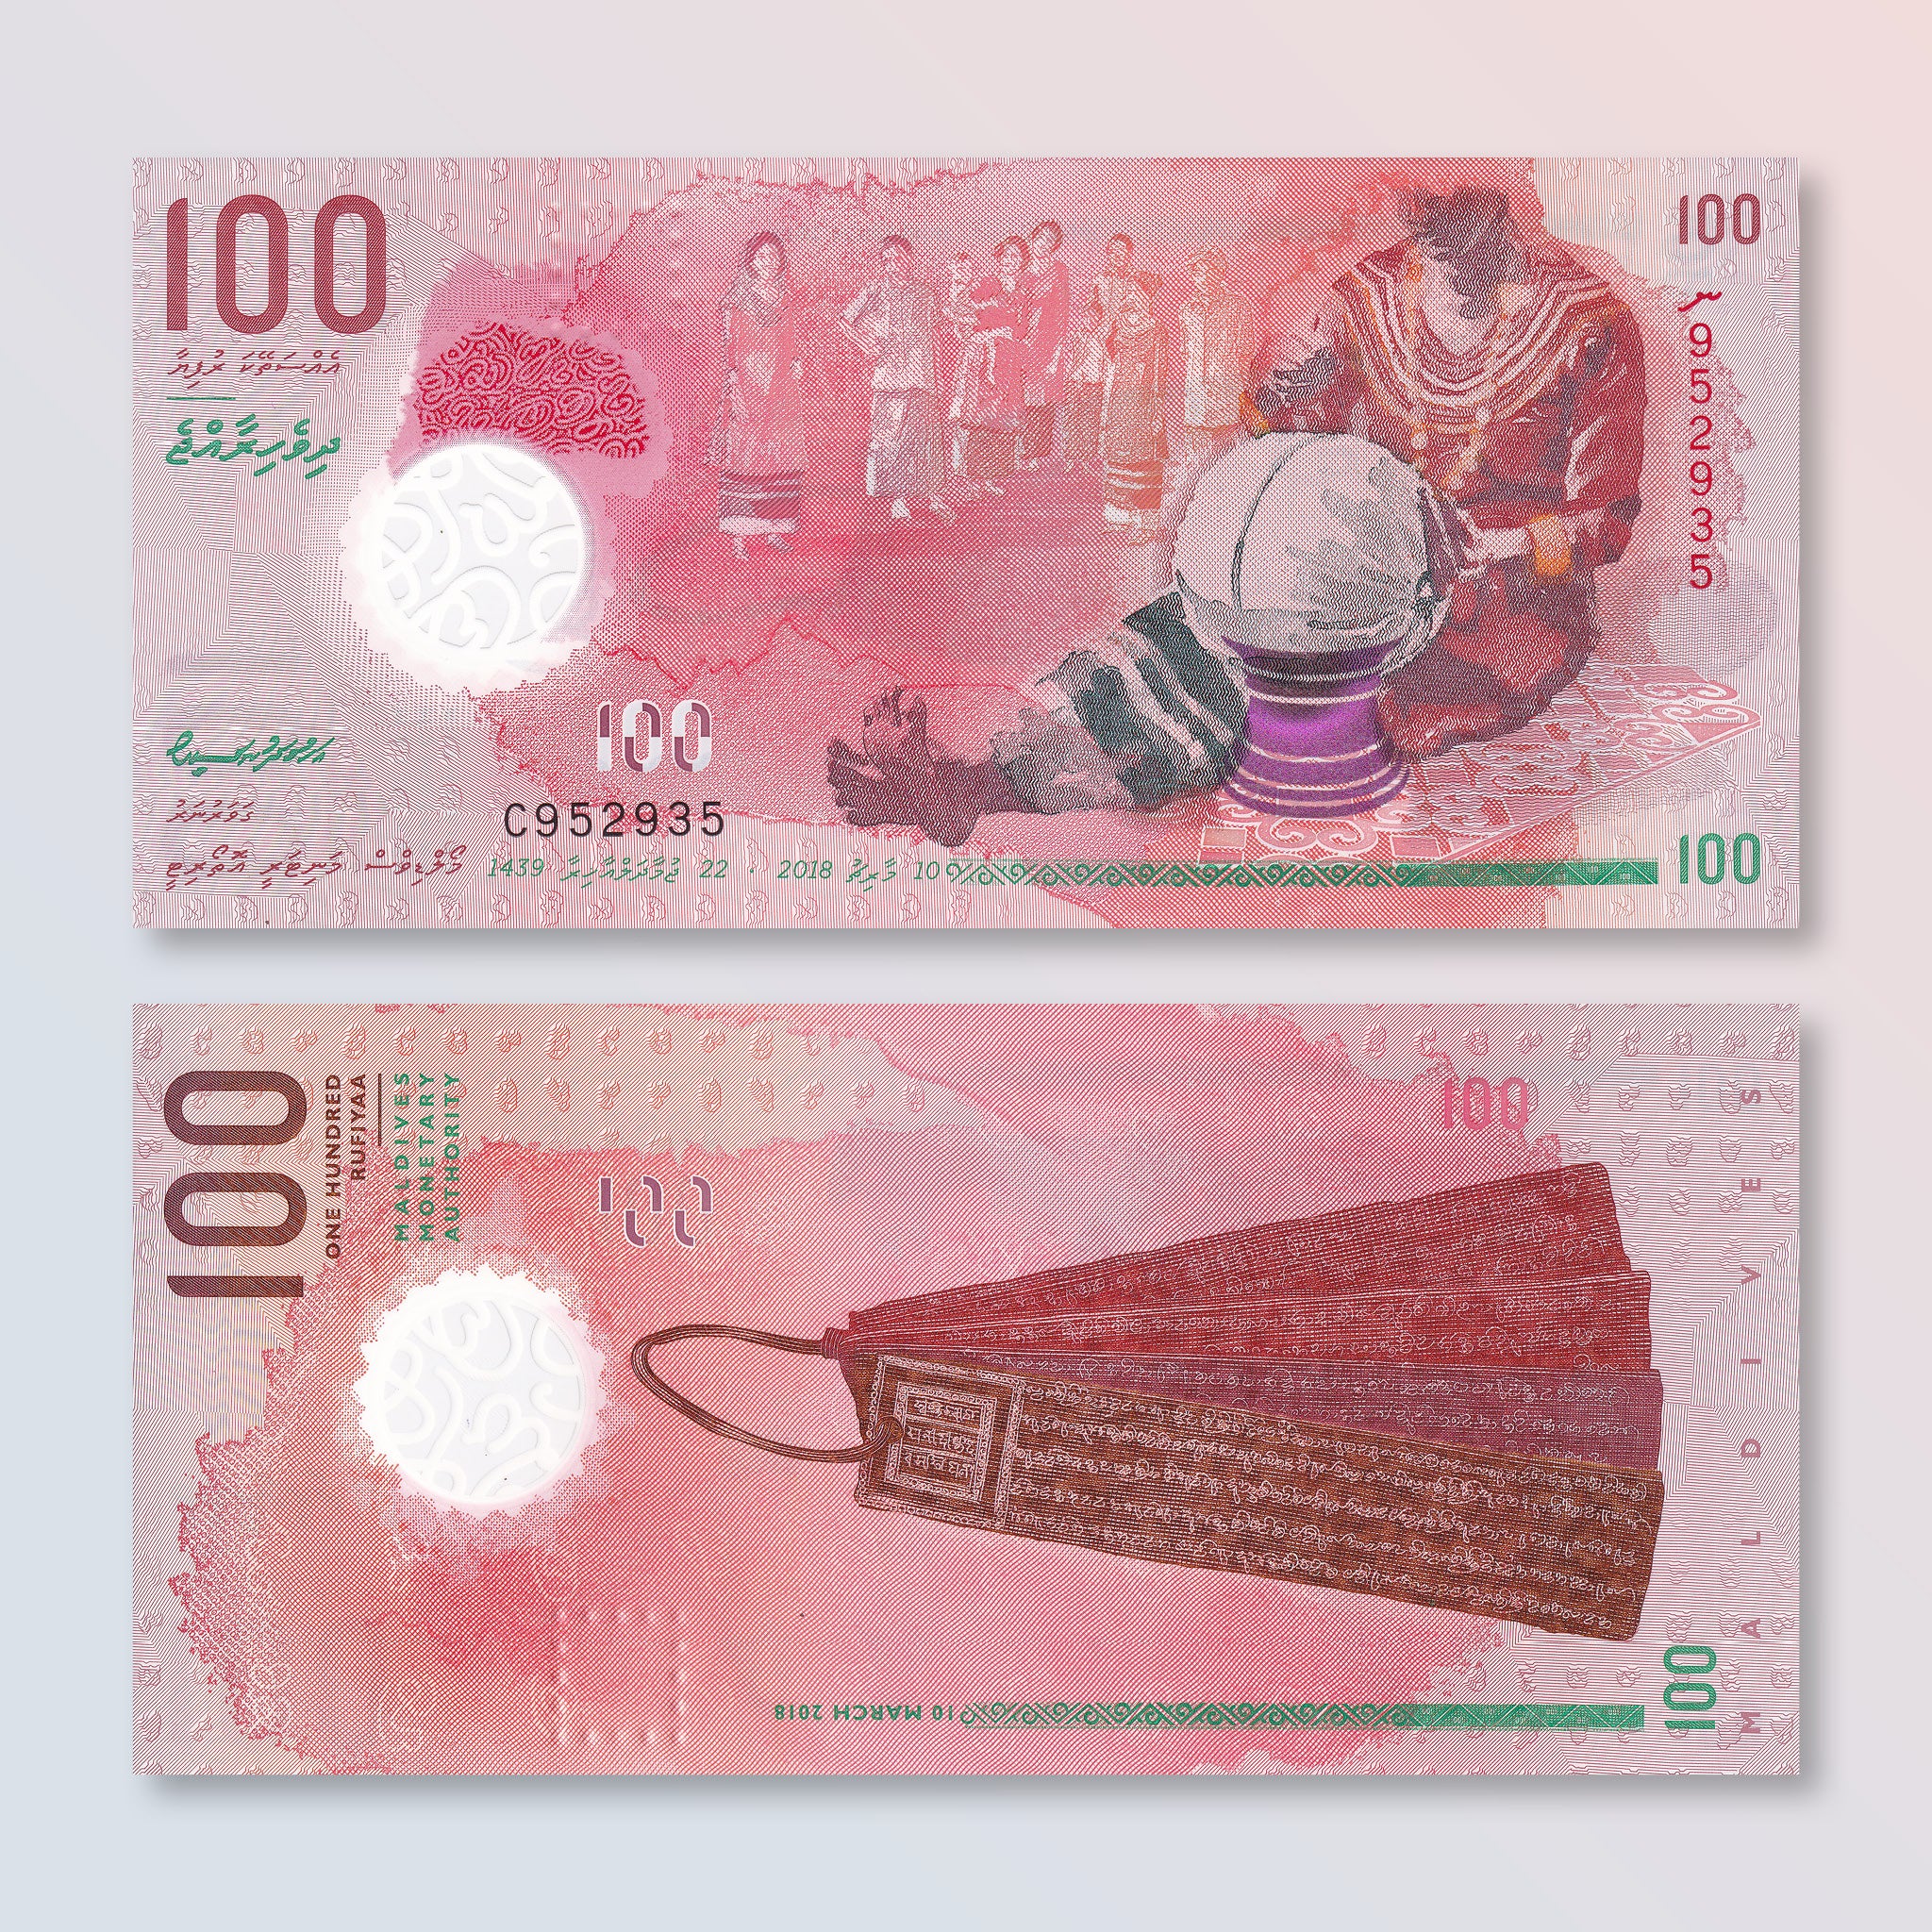 Maldives 100 Rufiyaa, 2018, B219b, P29, UNC - Robert's World Money - World Banknotes